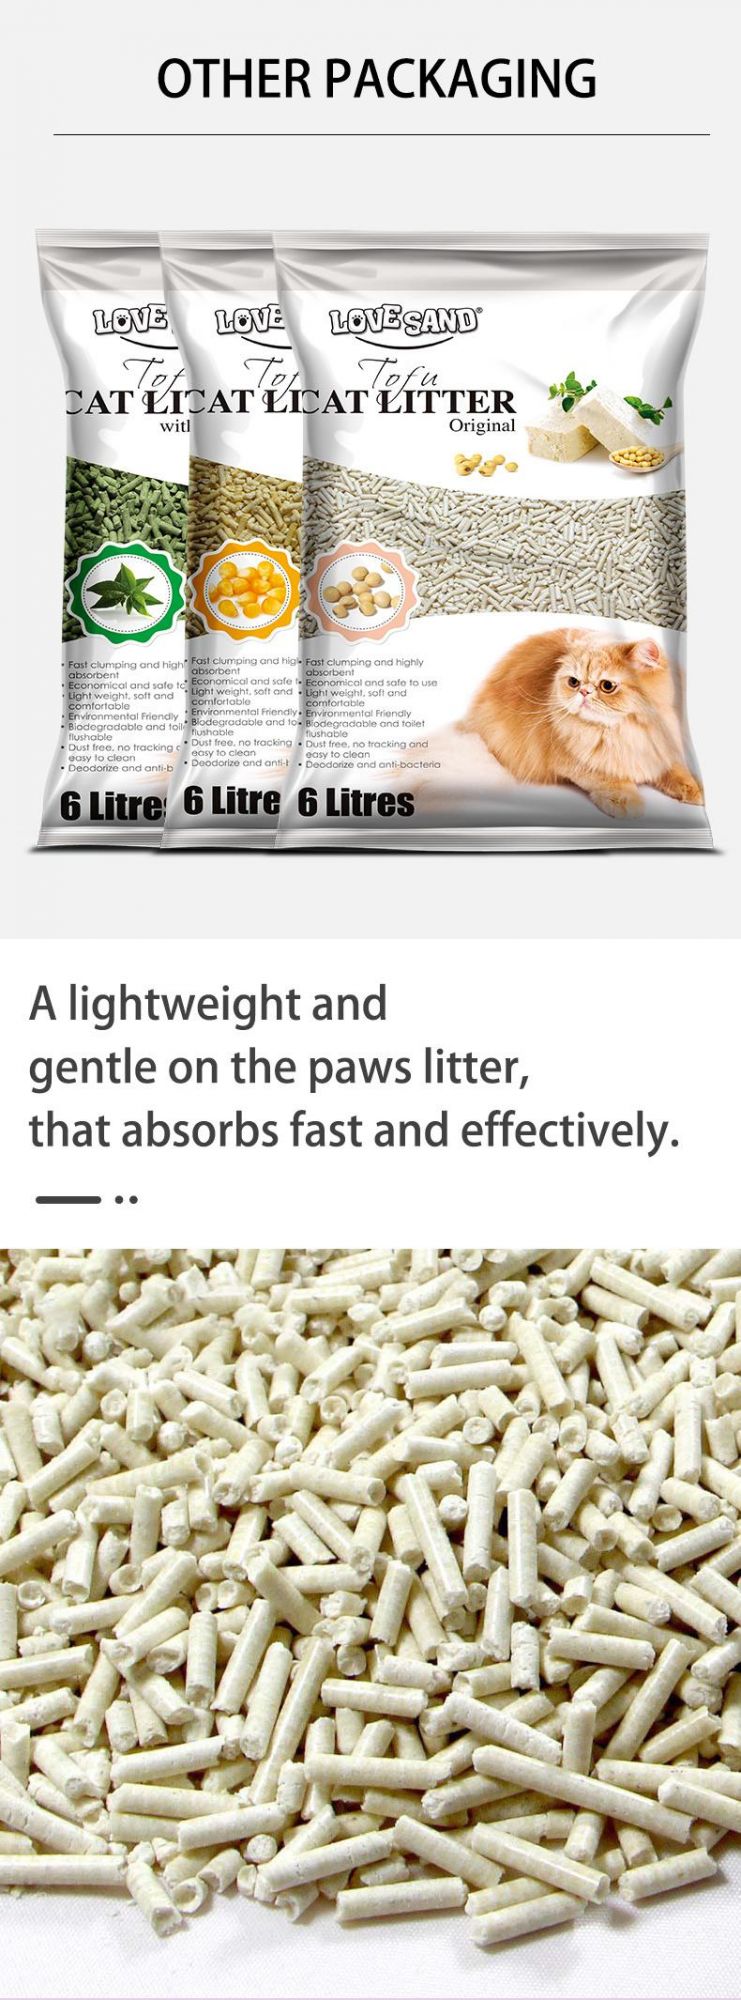 Eco-Friendly Flushable Plant Tofu Cat Litter Pet Product